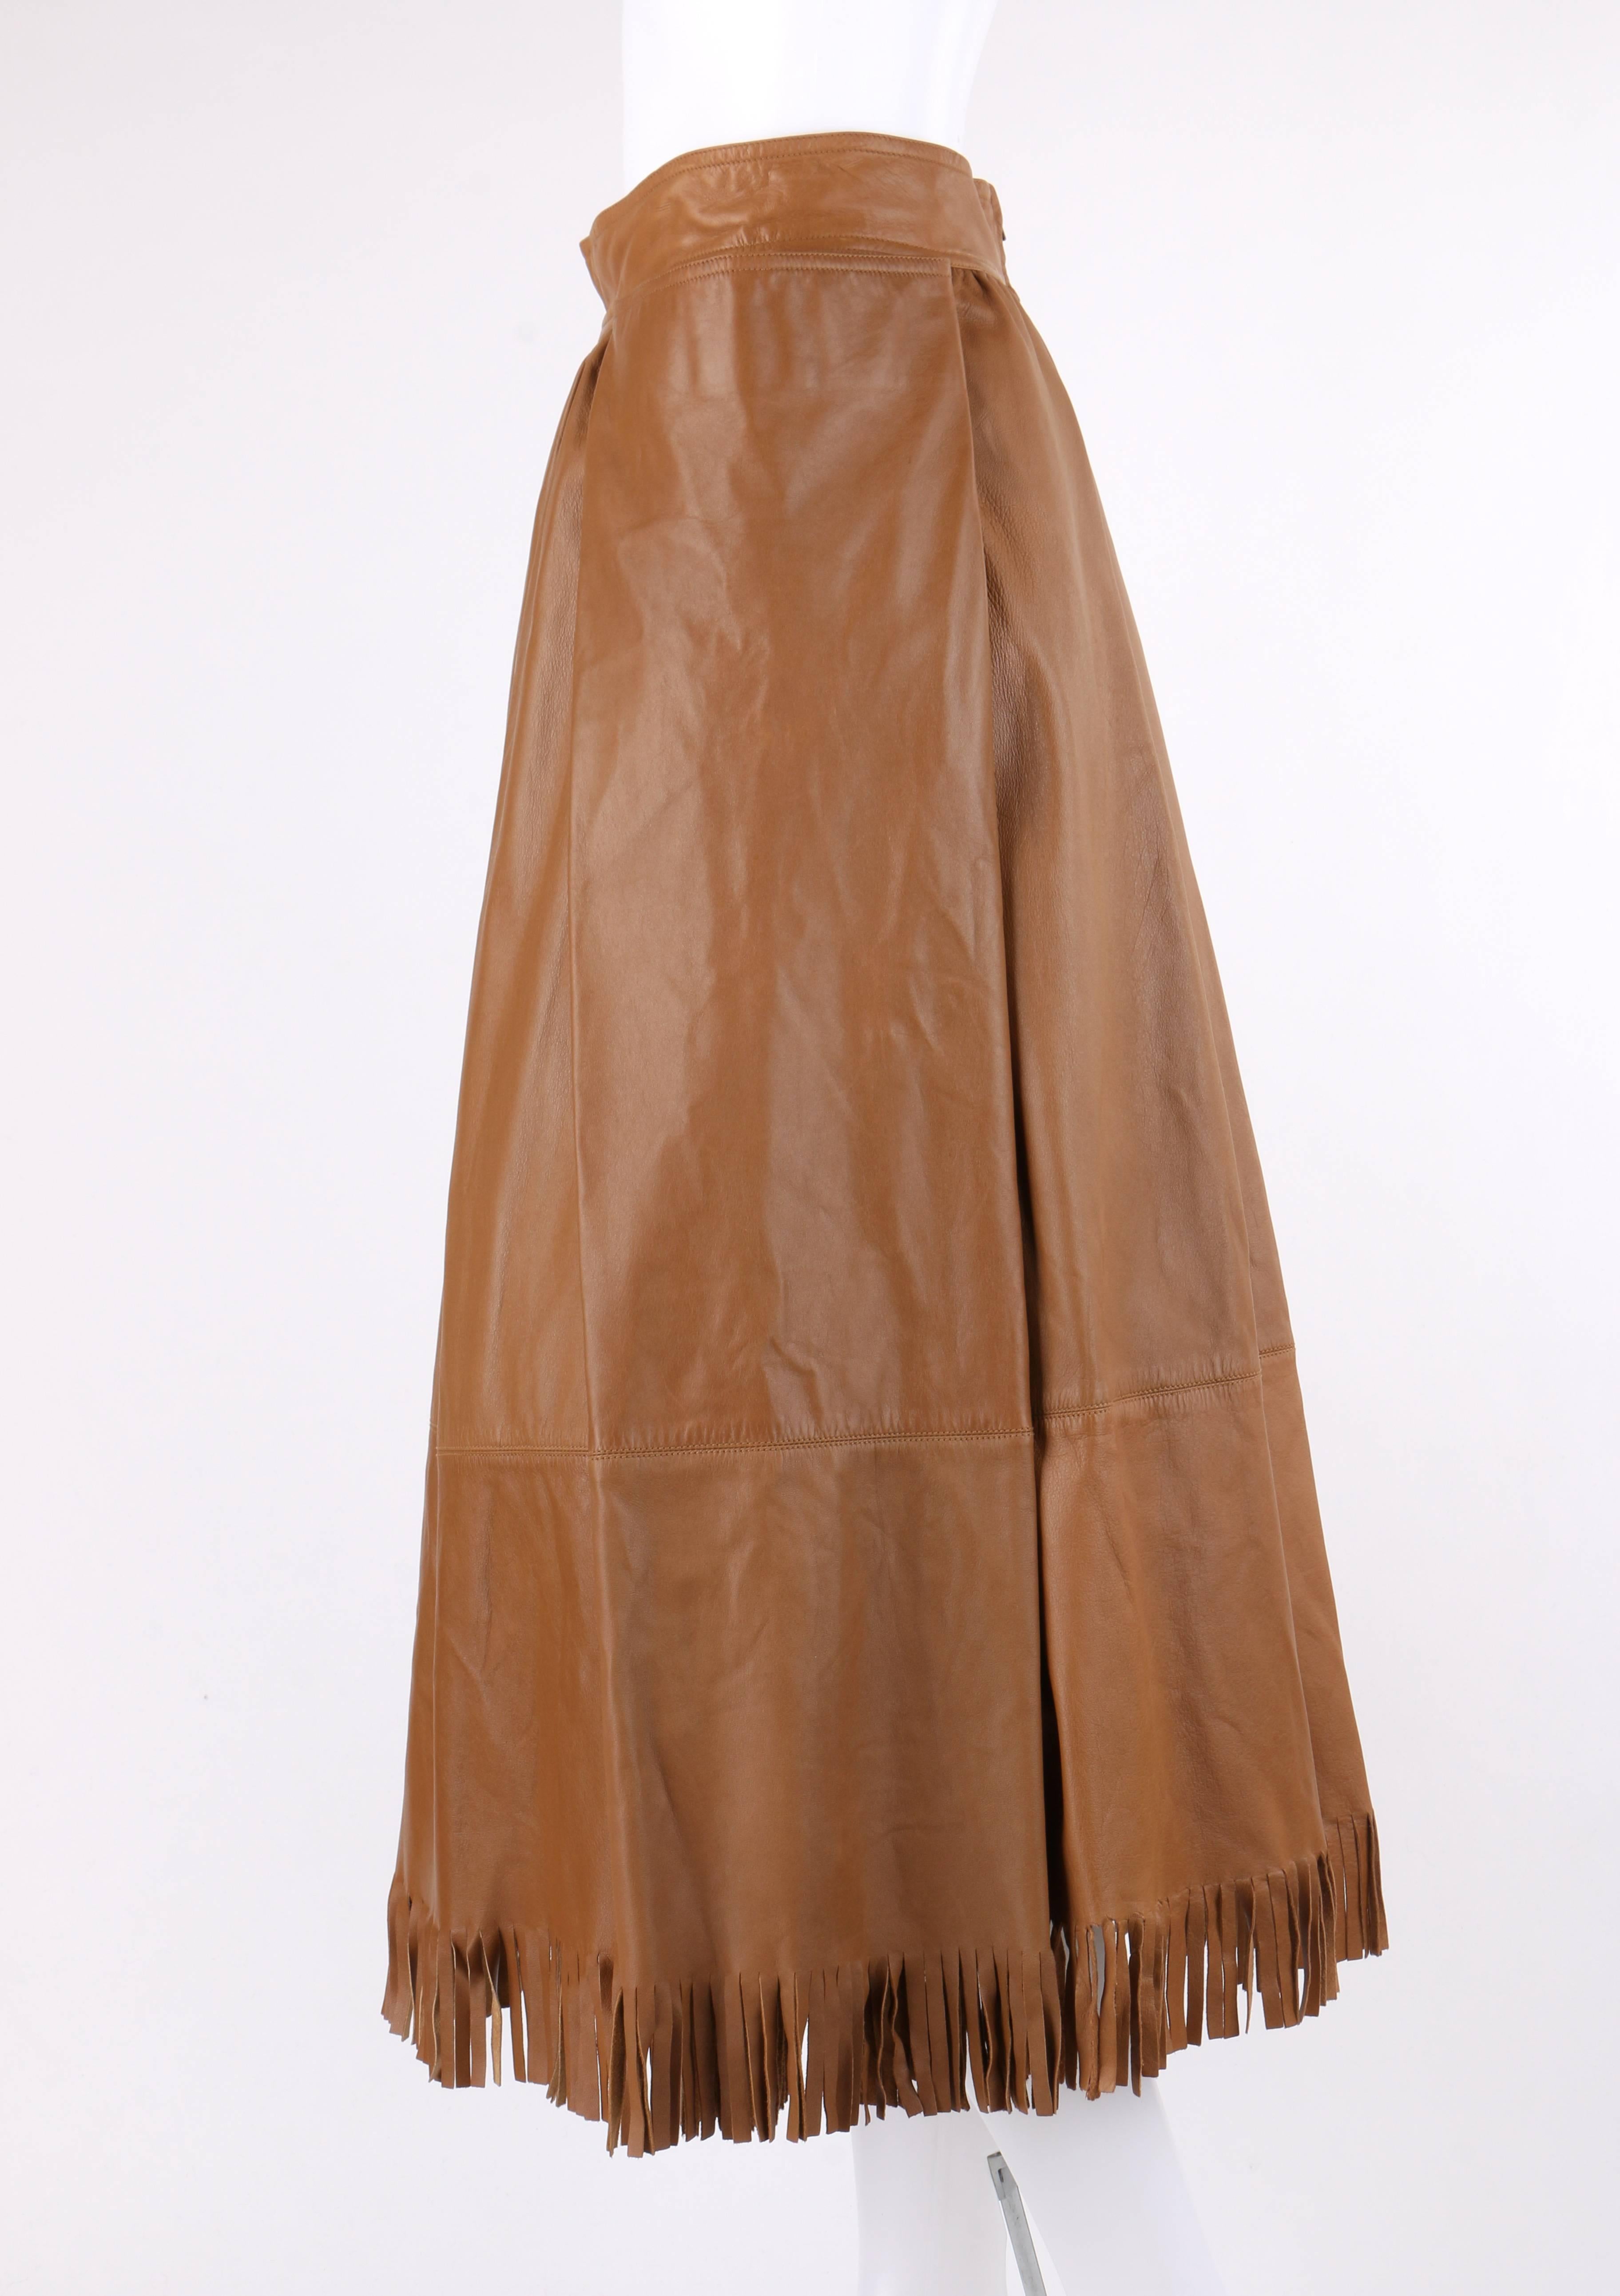 GUCCI c.1970's Tan Brown Leather Fringe Hem Pleated Tea Length Skirt 1